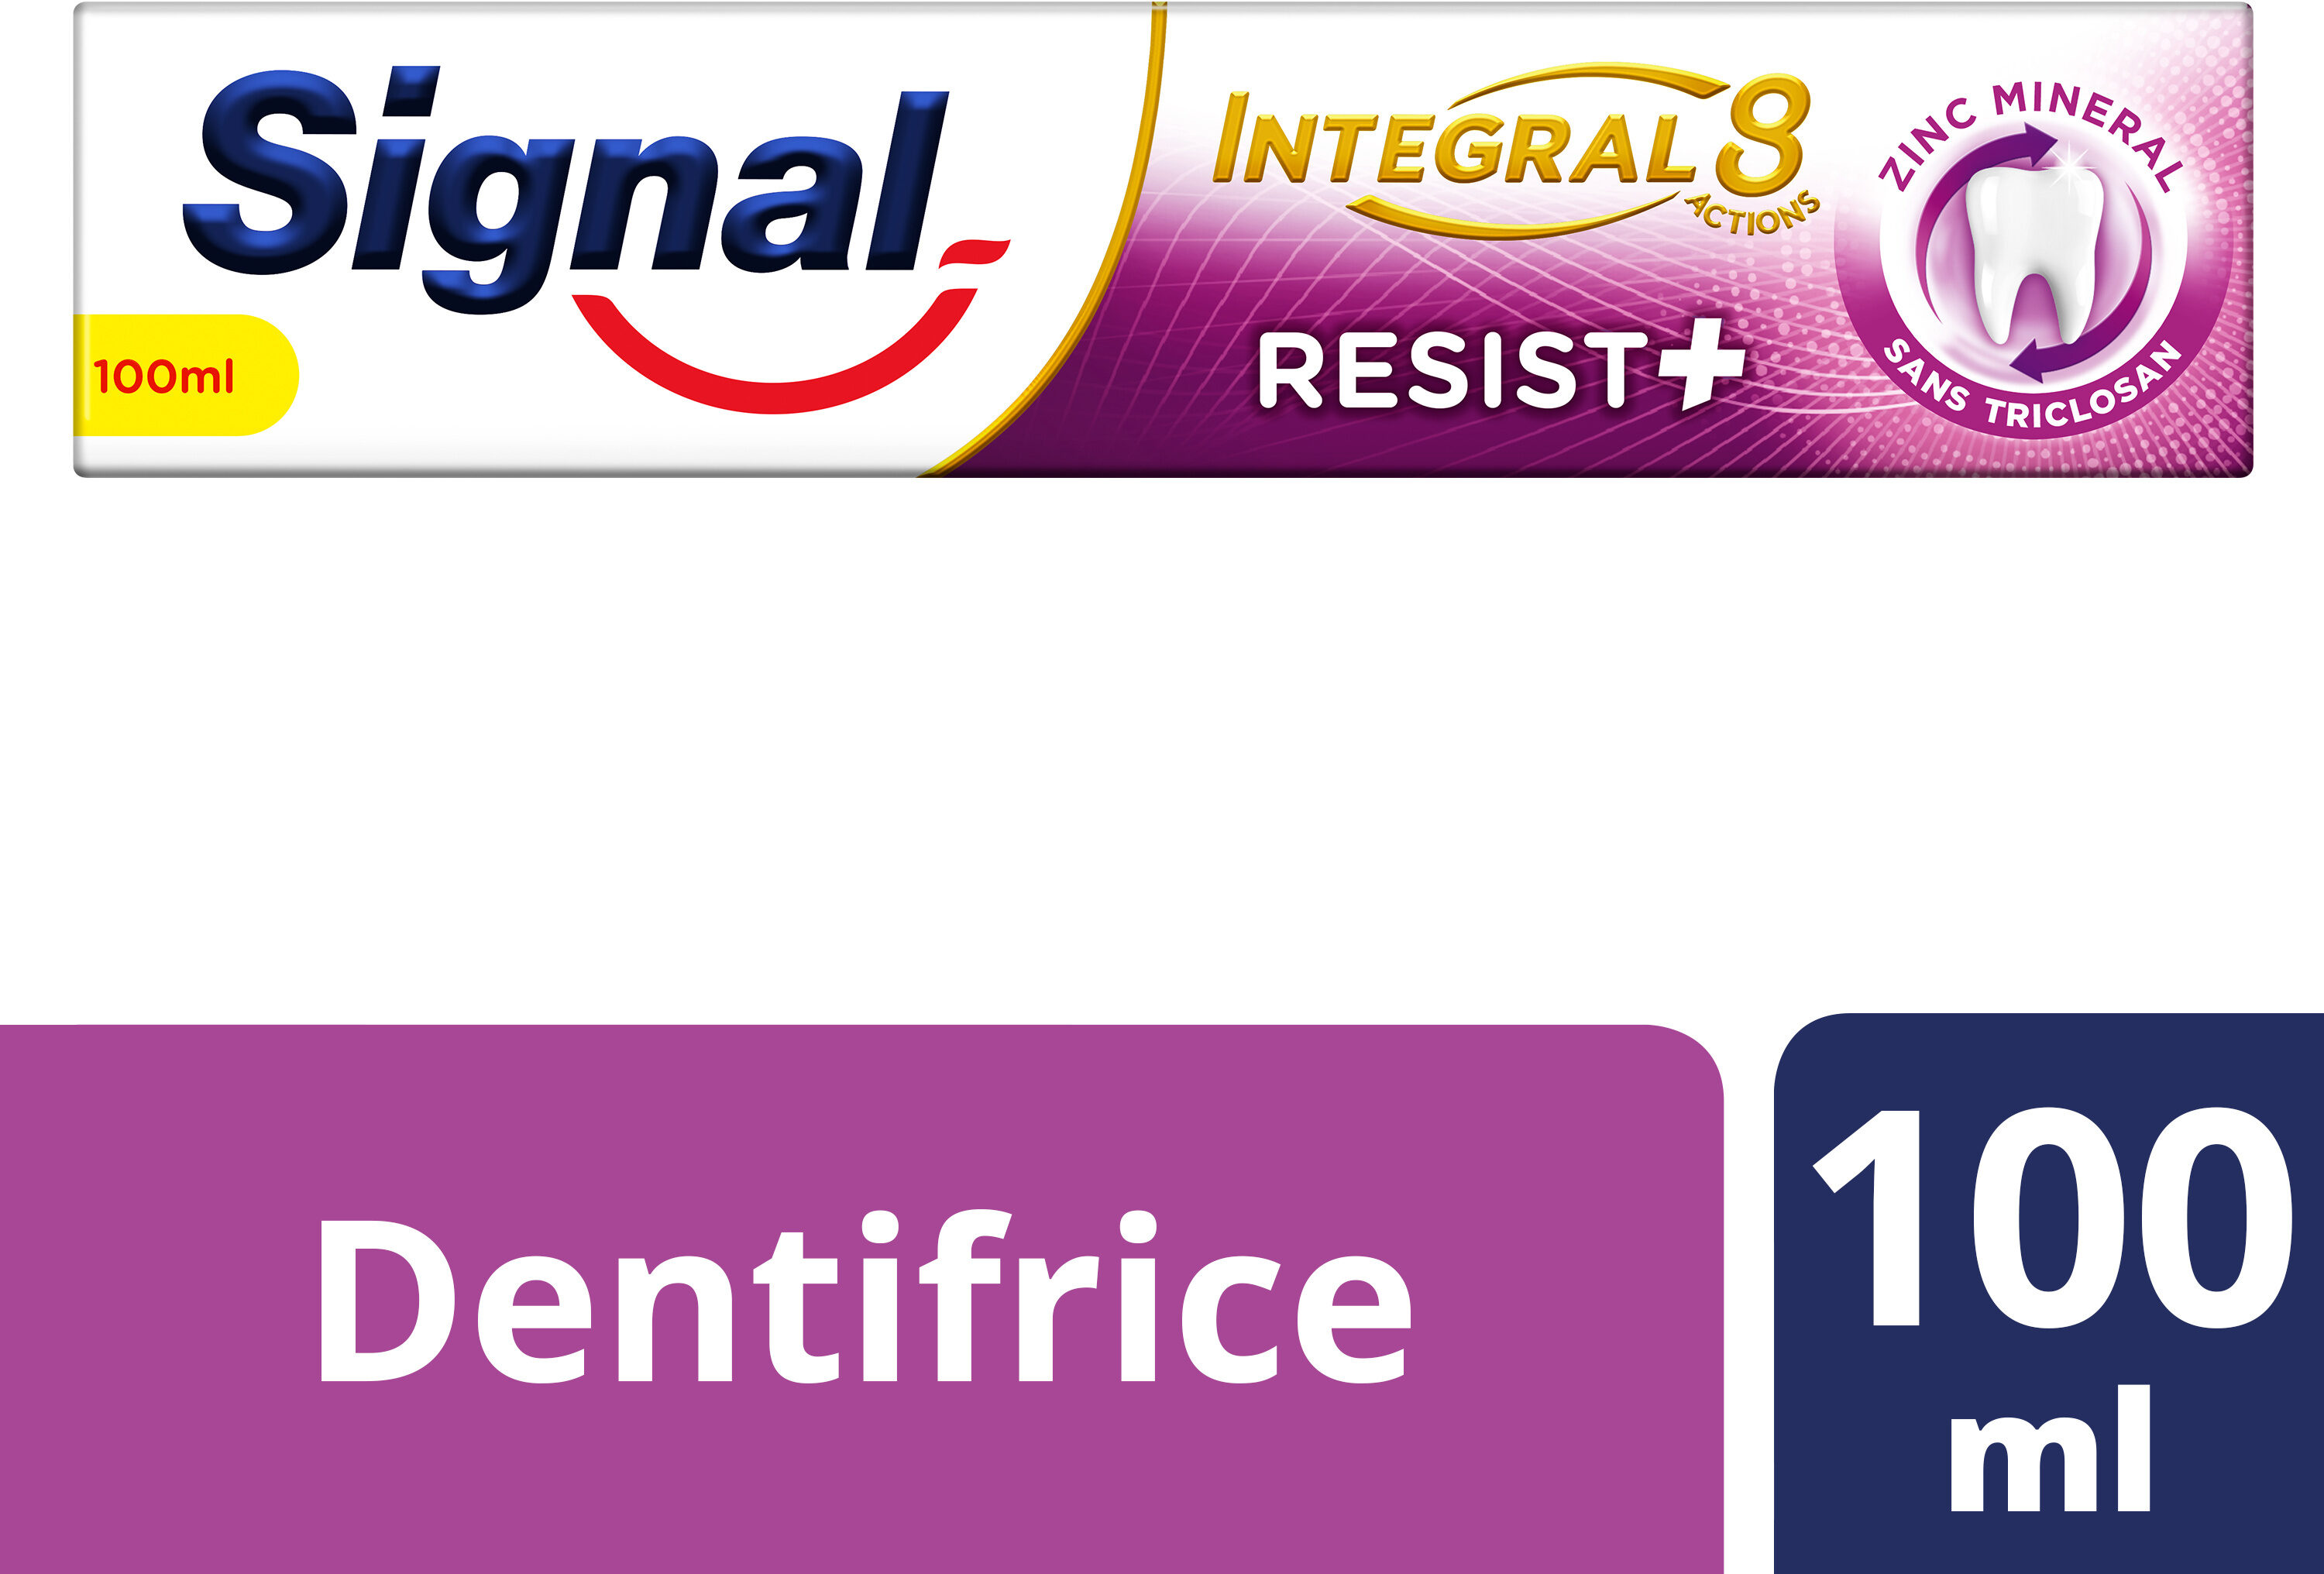 Signal Dentifrice Integral 8 Resist Plus - Produit - fr